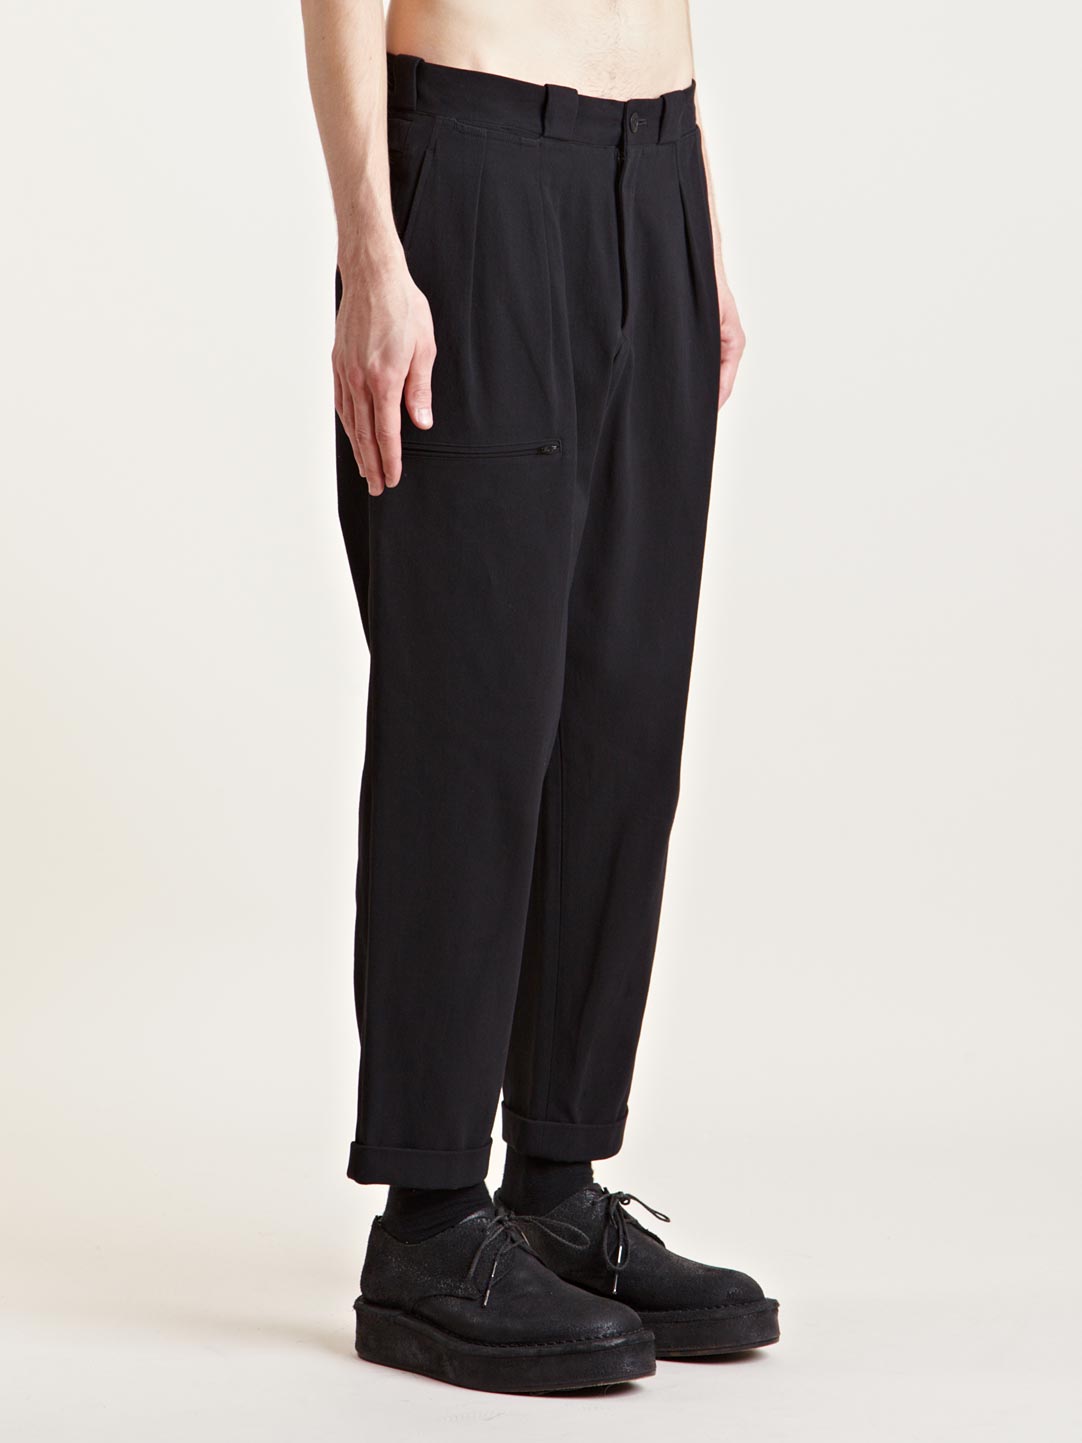 Yohji Yamamoto Mens Pleated Cotton Chino Pants in Black for Men - Lyst